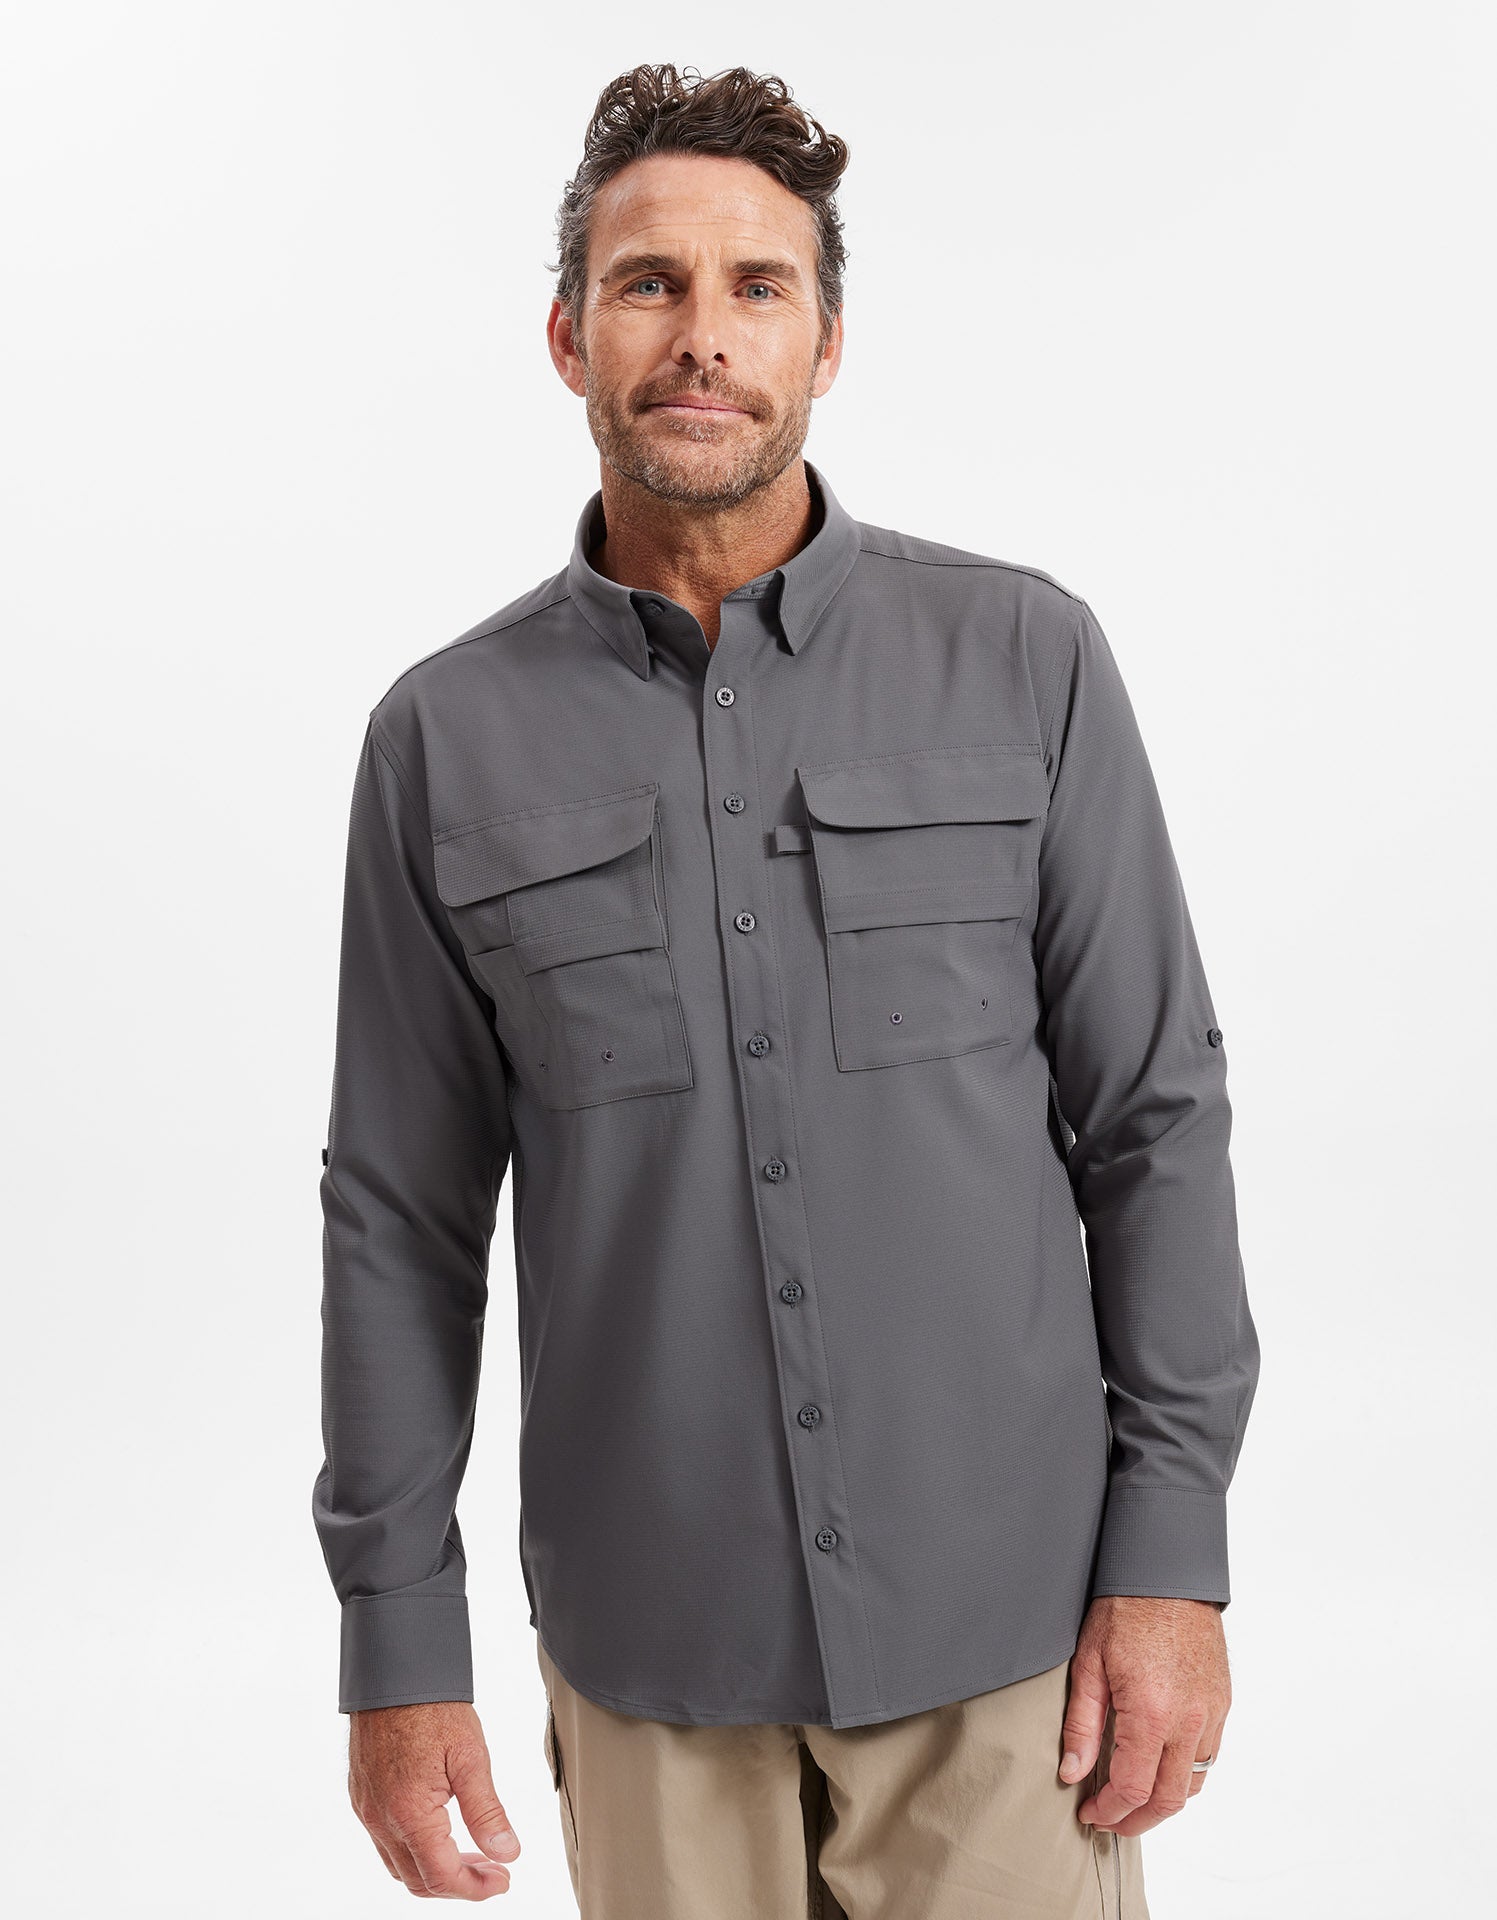 Magellan Roll-Tab Sleeve Shirts for Men